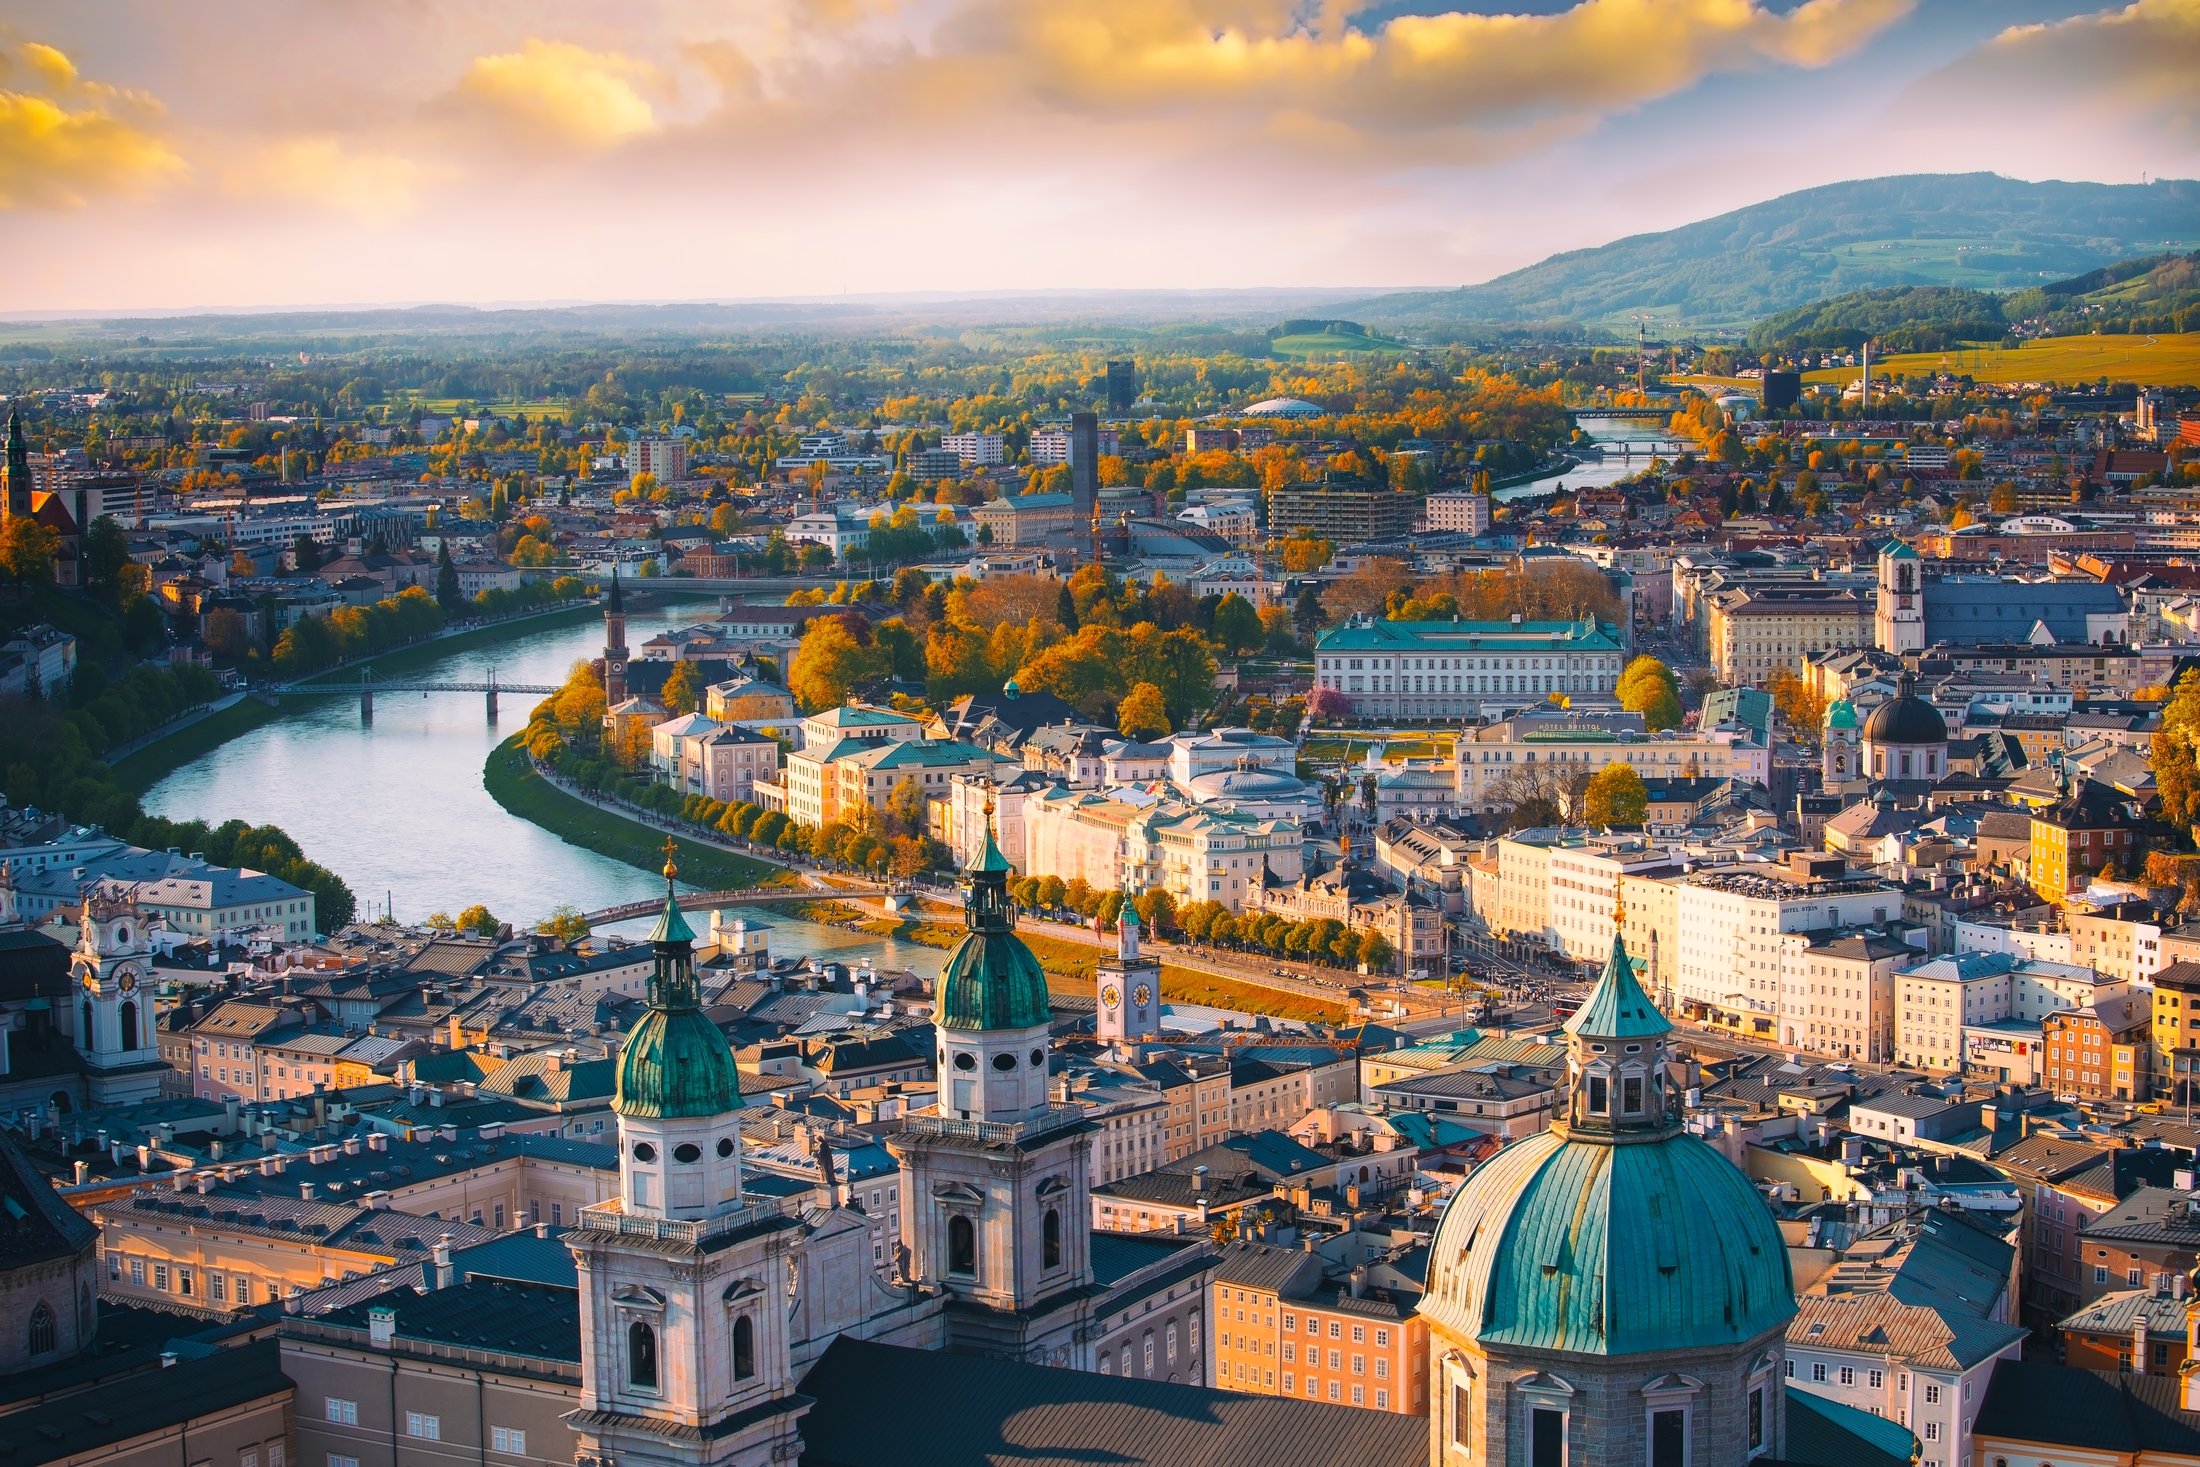 The Salzach River runs through the city of Salzburg, in Austria. (Shutterstock Photo)